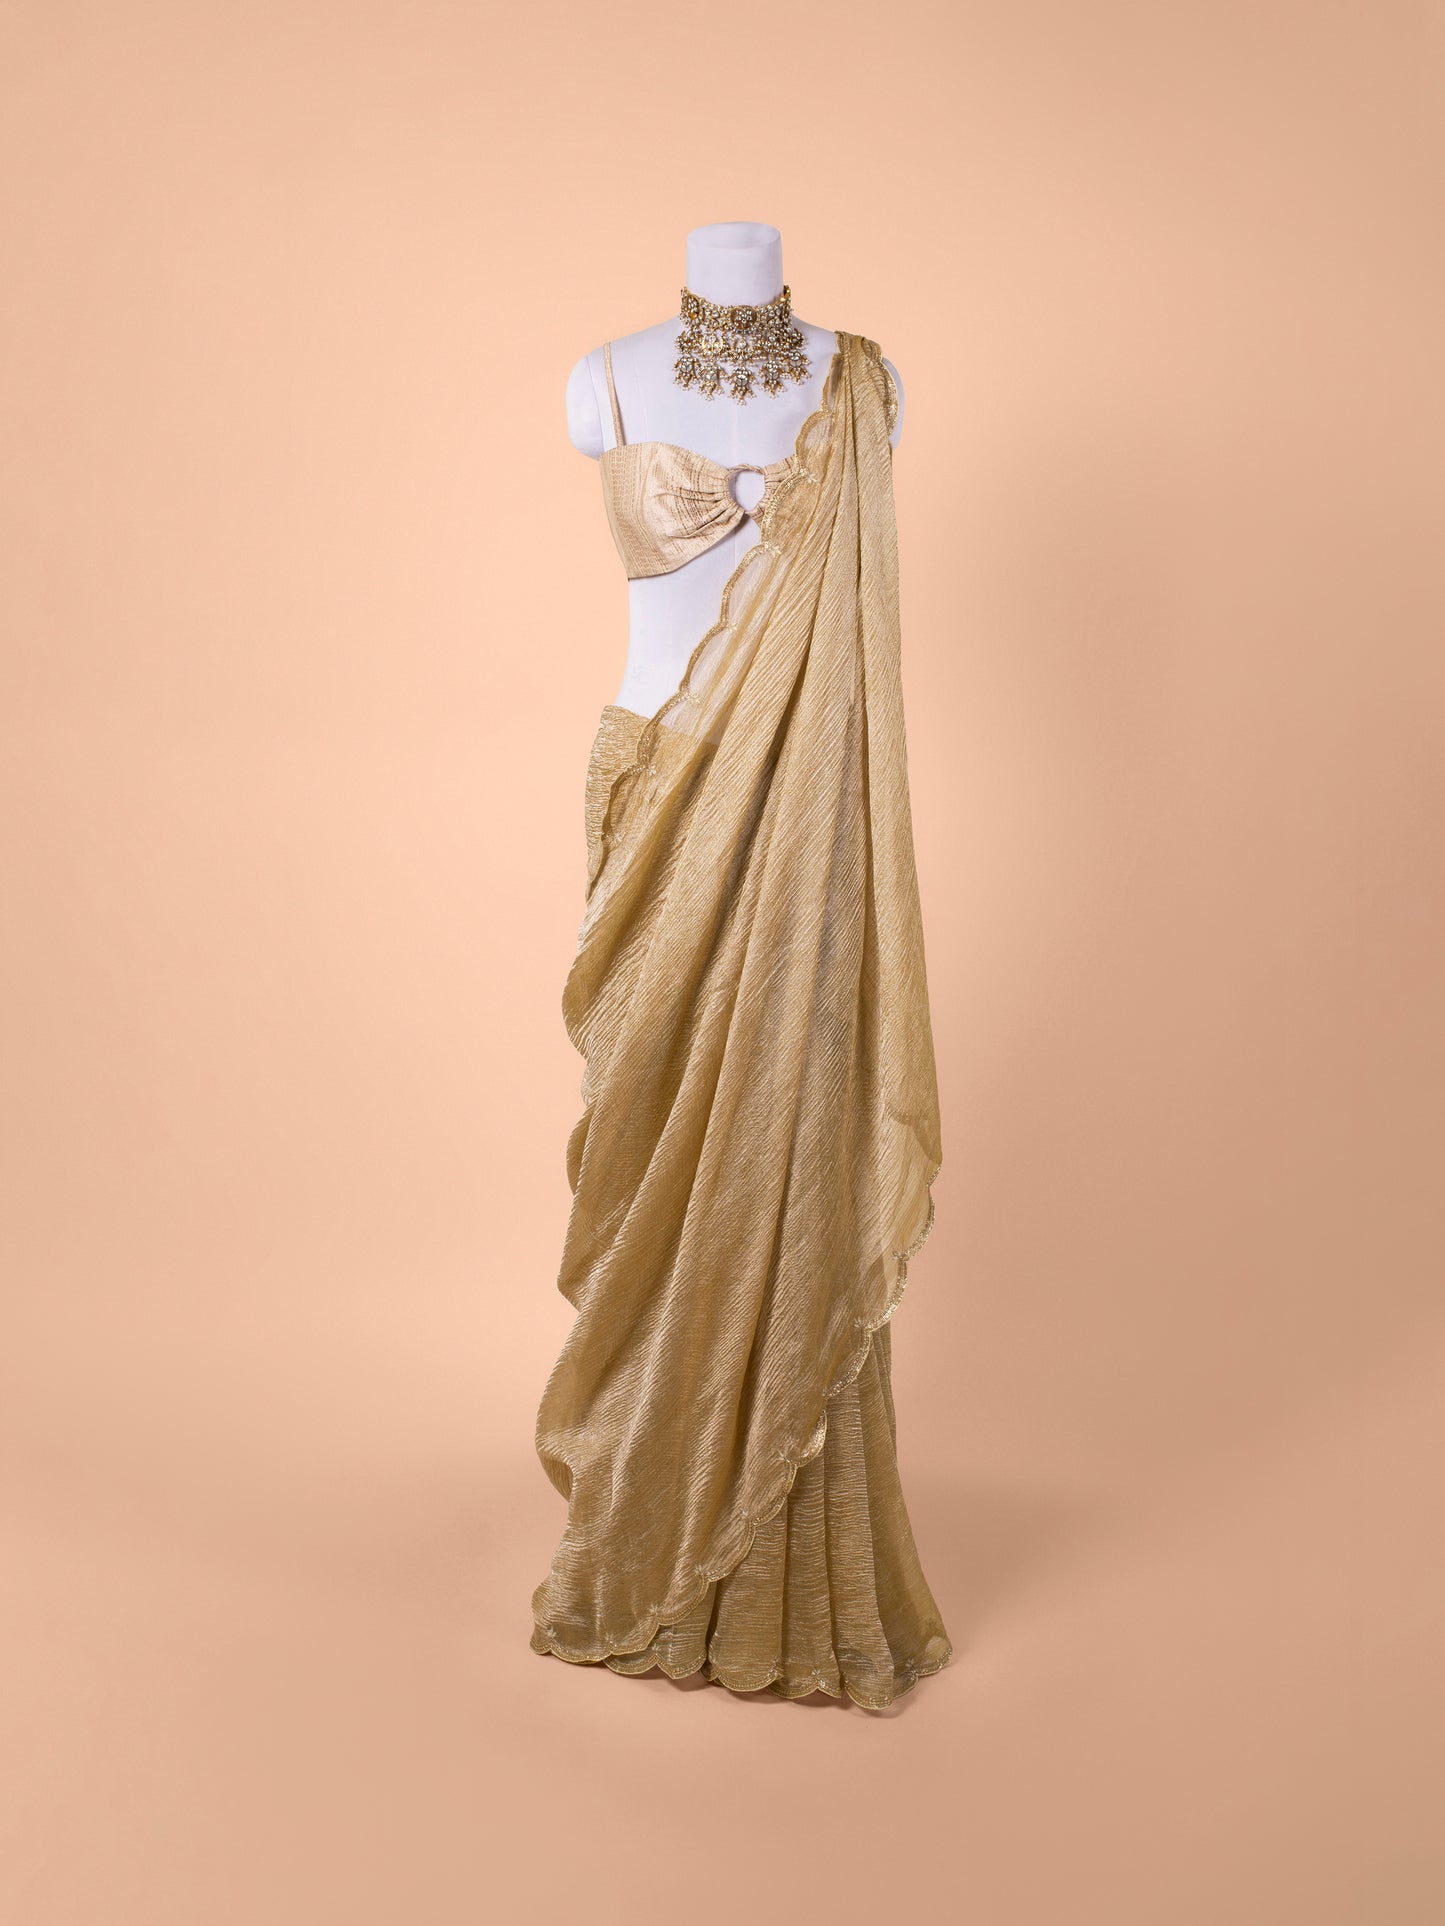 Handwoven Sepia Gold Tissue Saree